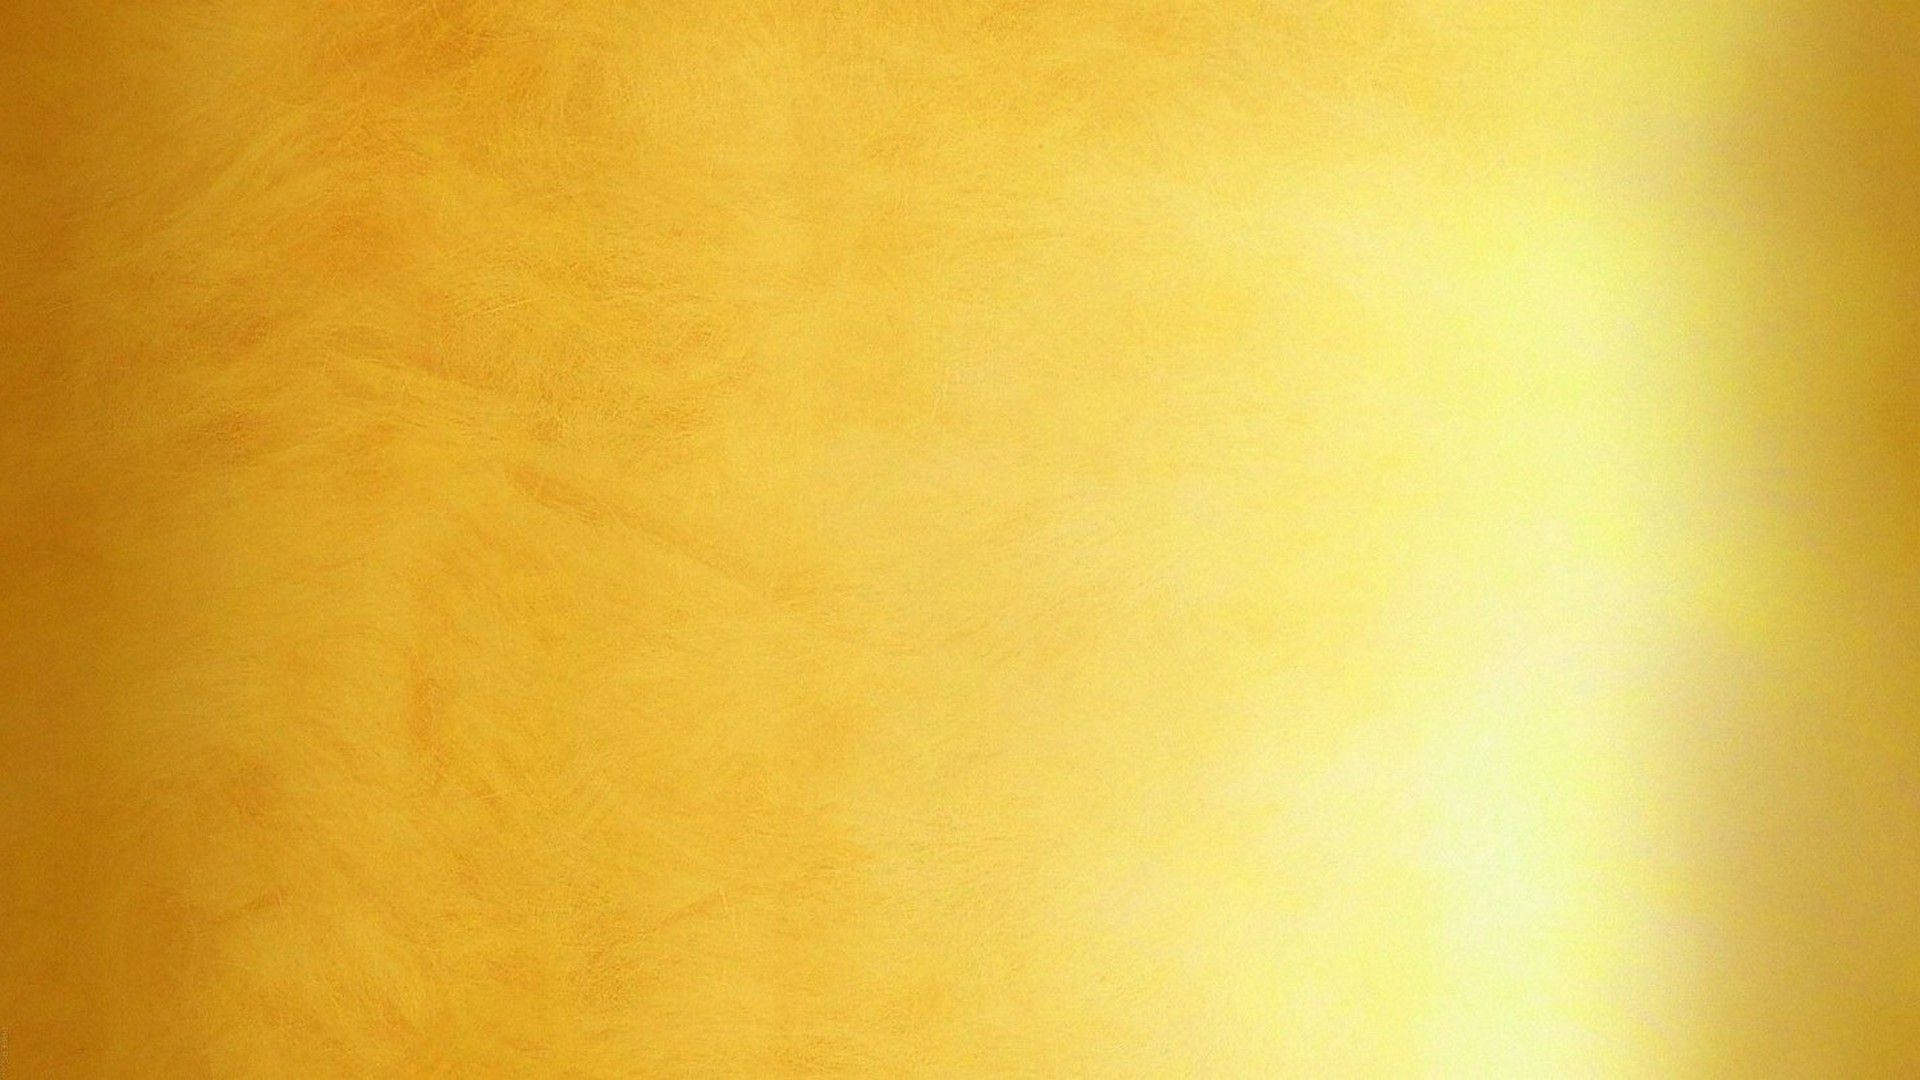 Golden Yellow Background Images  Free Download on Freepik